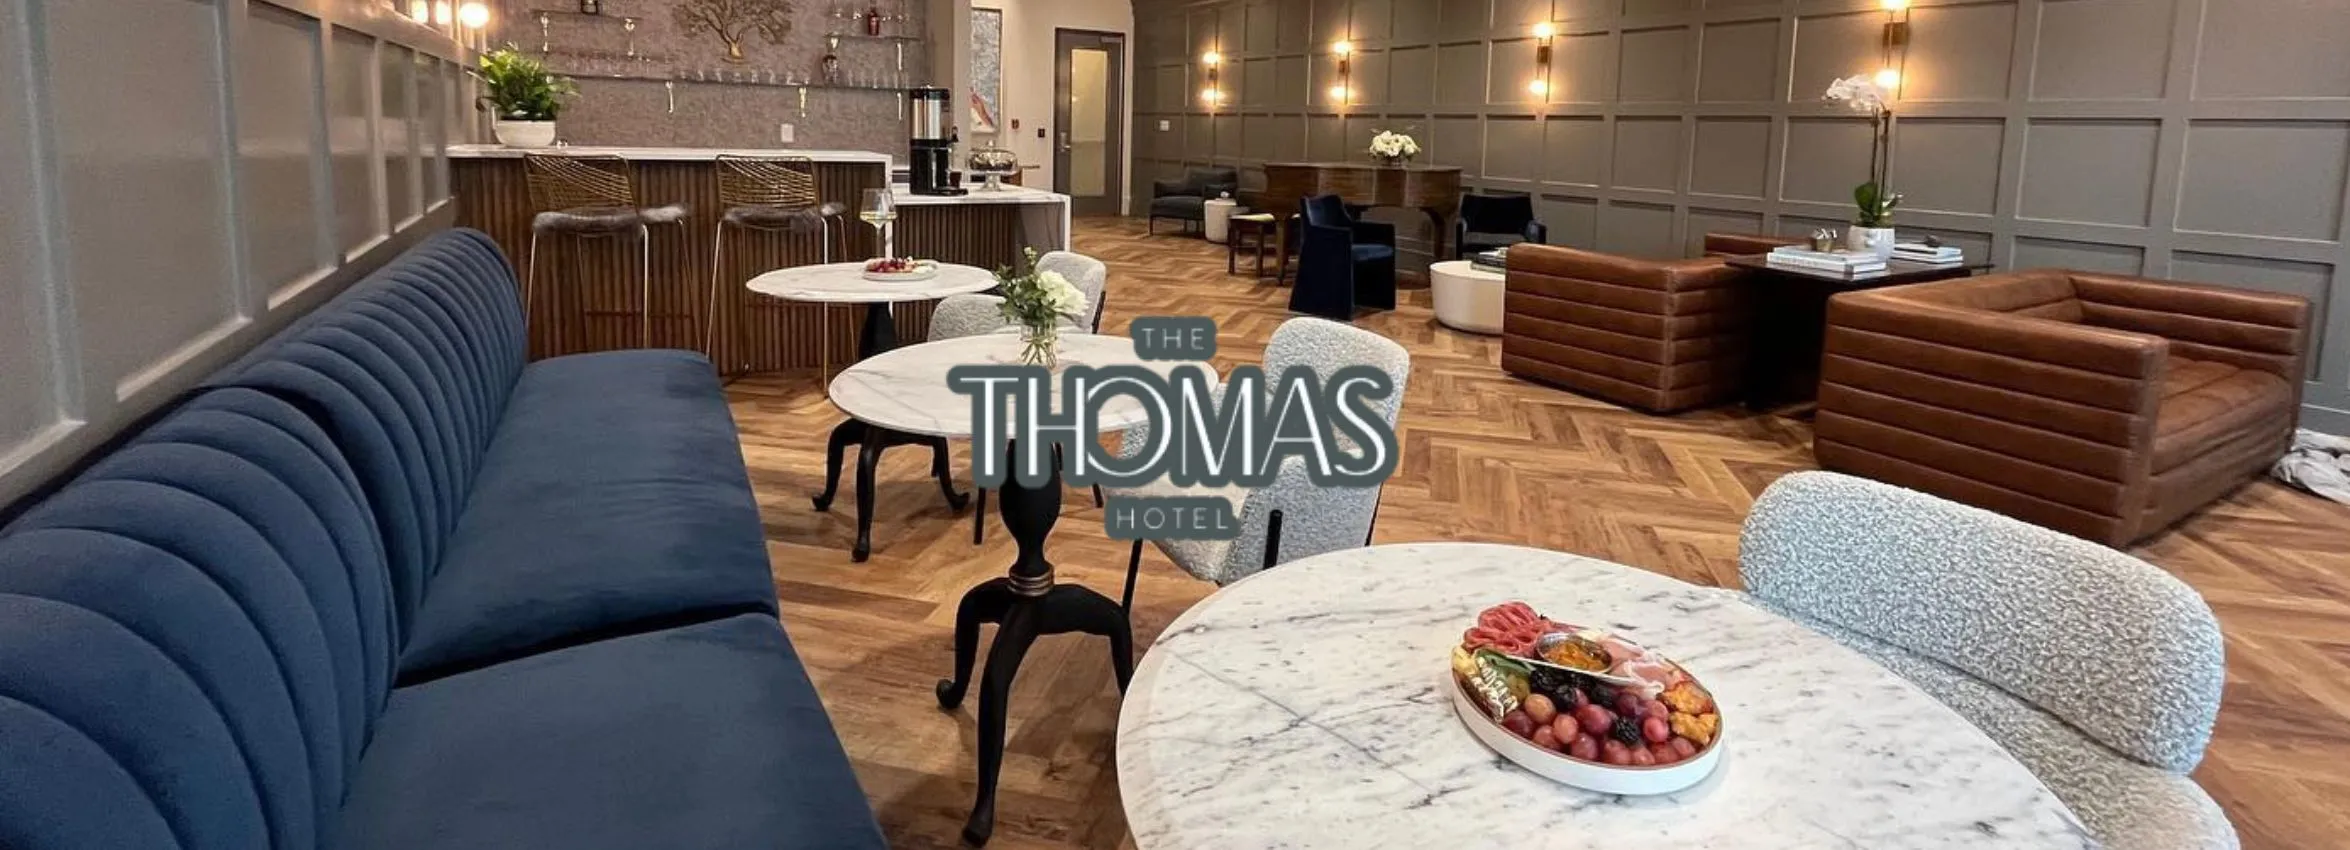 The-Thomas-Hotel_Desktop_ET